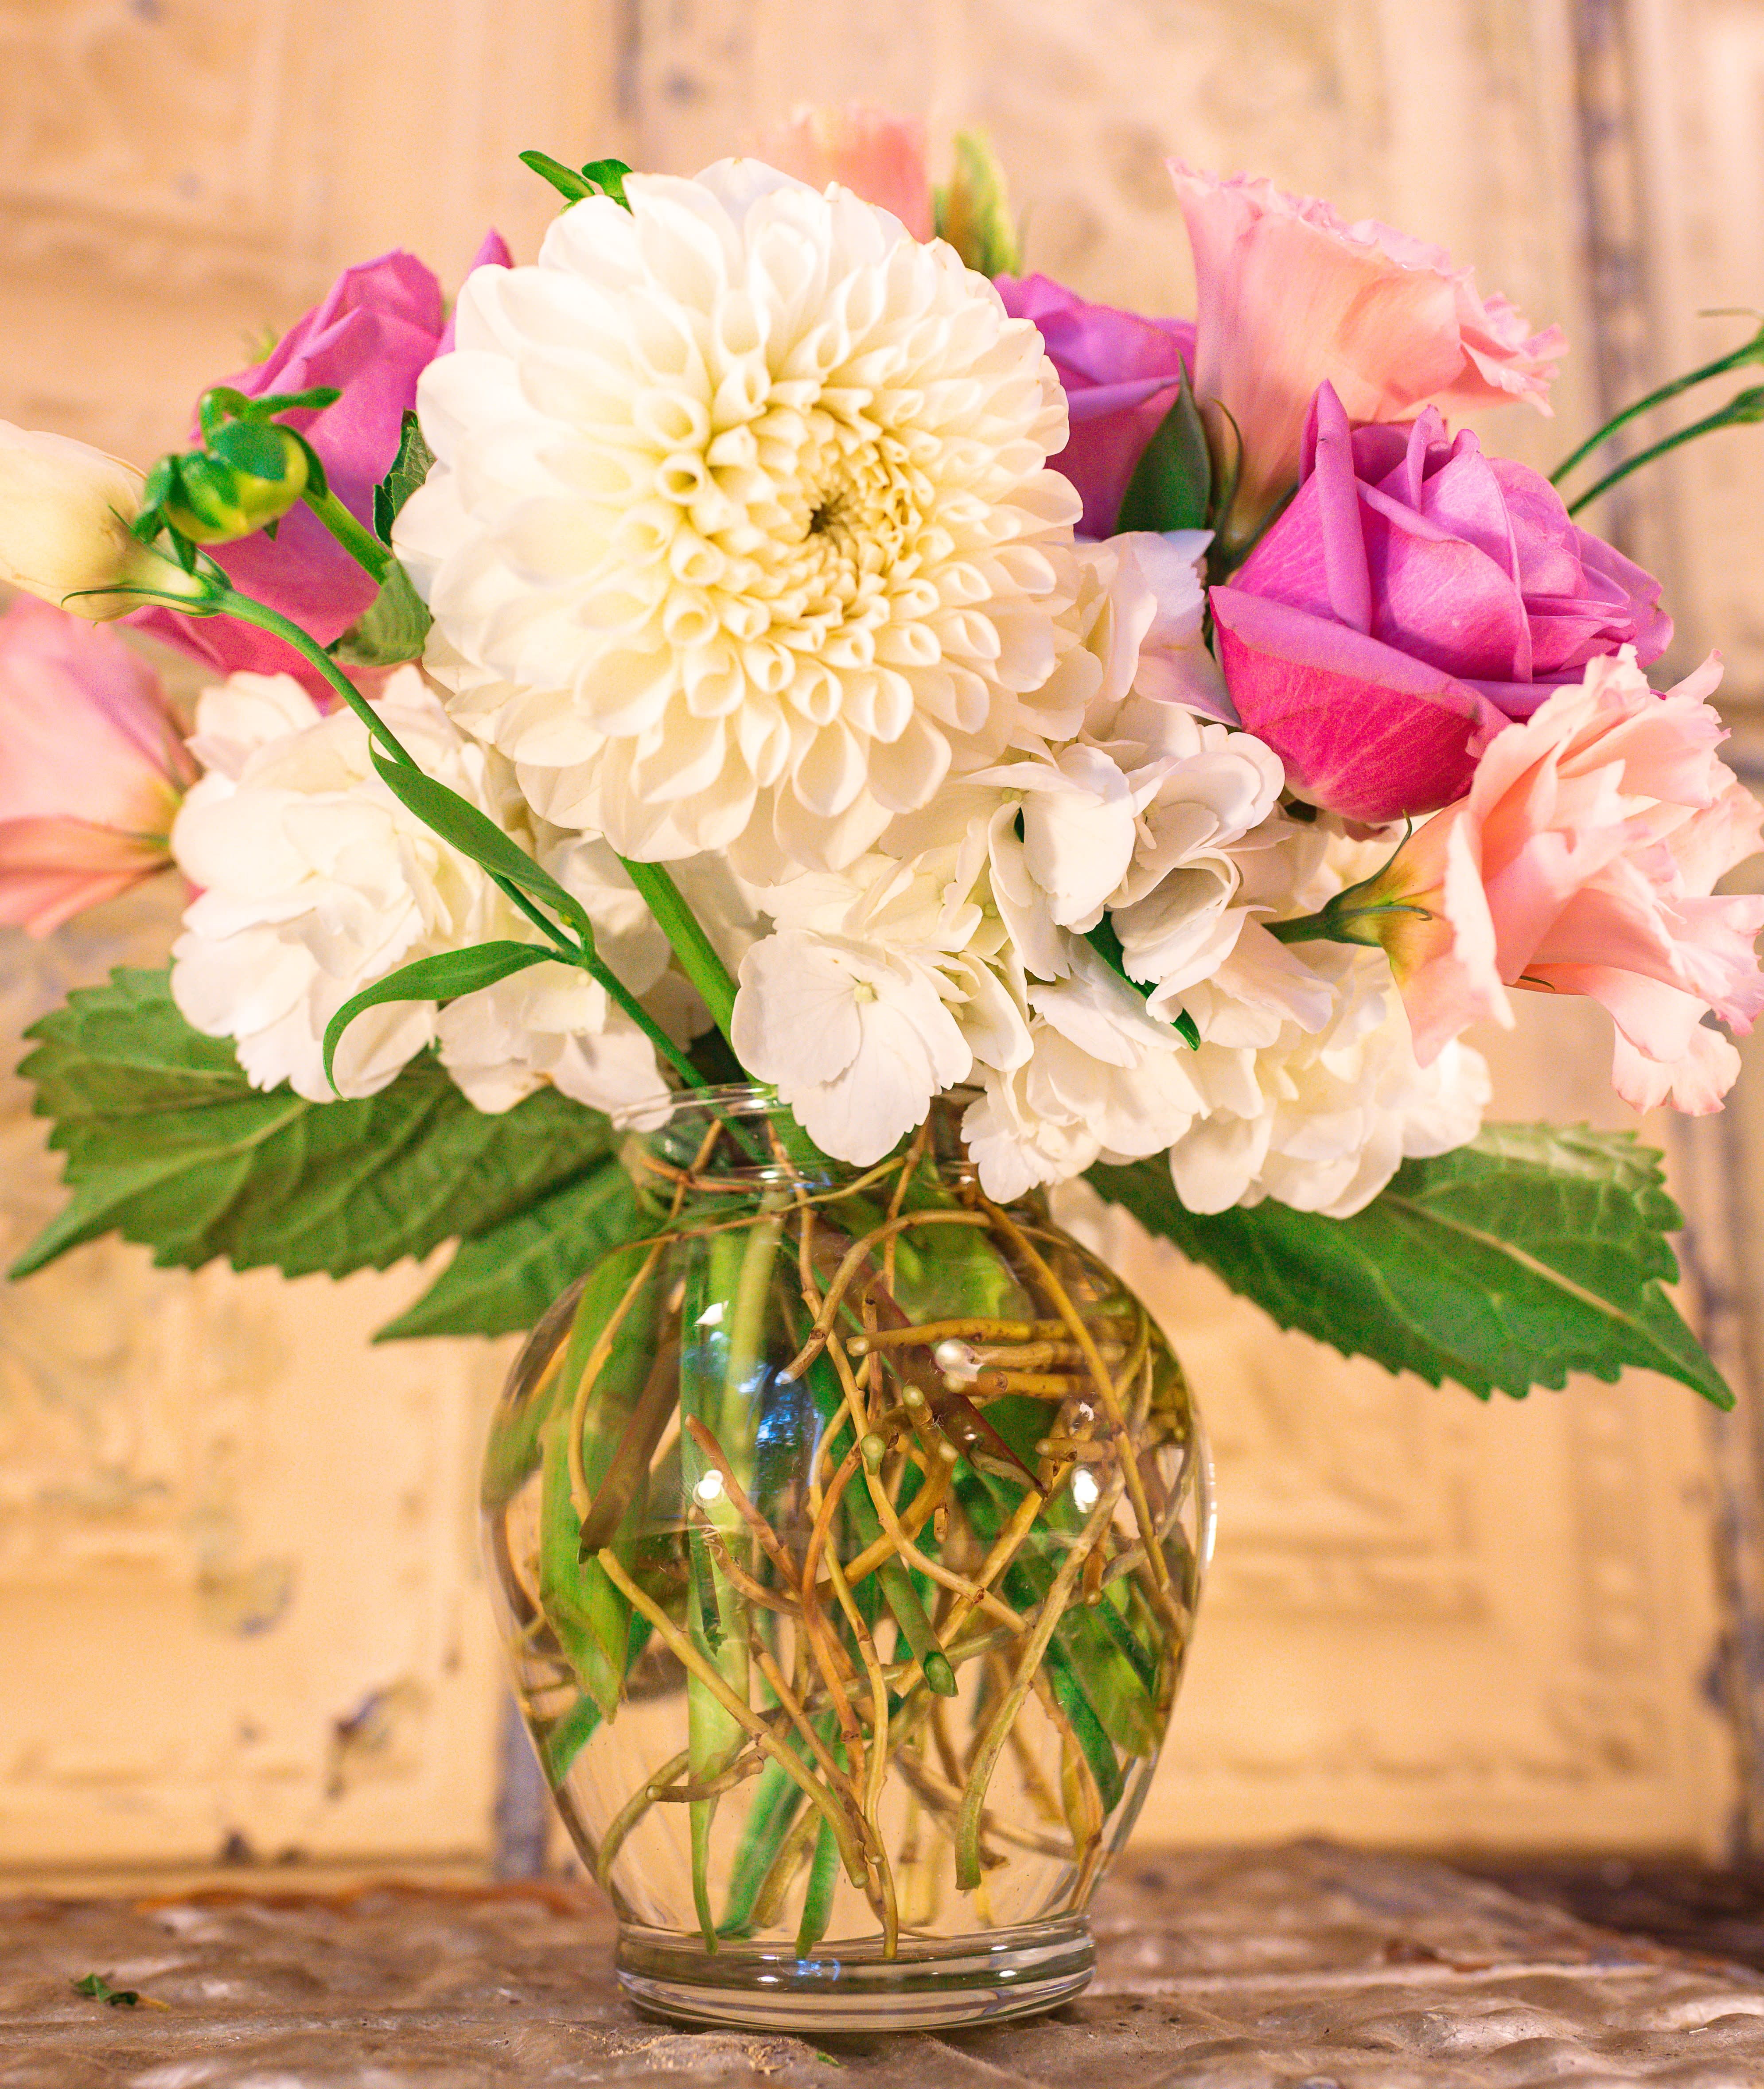 Dolly Parton - Enjoy this classic arrangement of dahlias, hydrangeas, lisianthus, and roses.